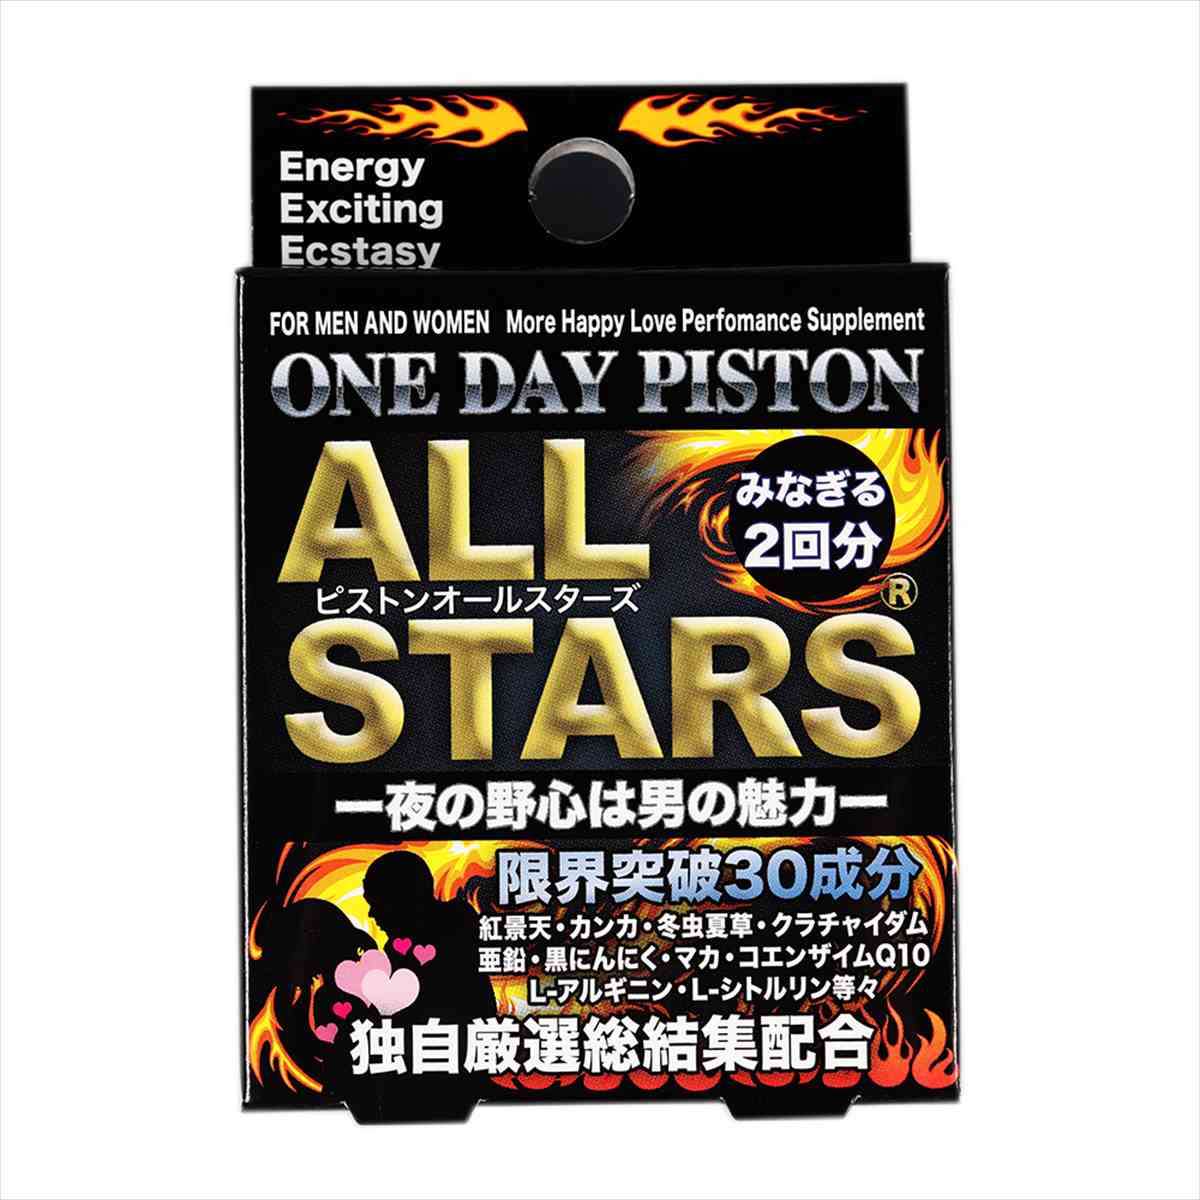 ONE DAY PISTON ALLSTARS 2